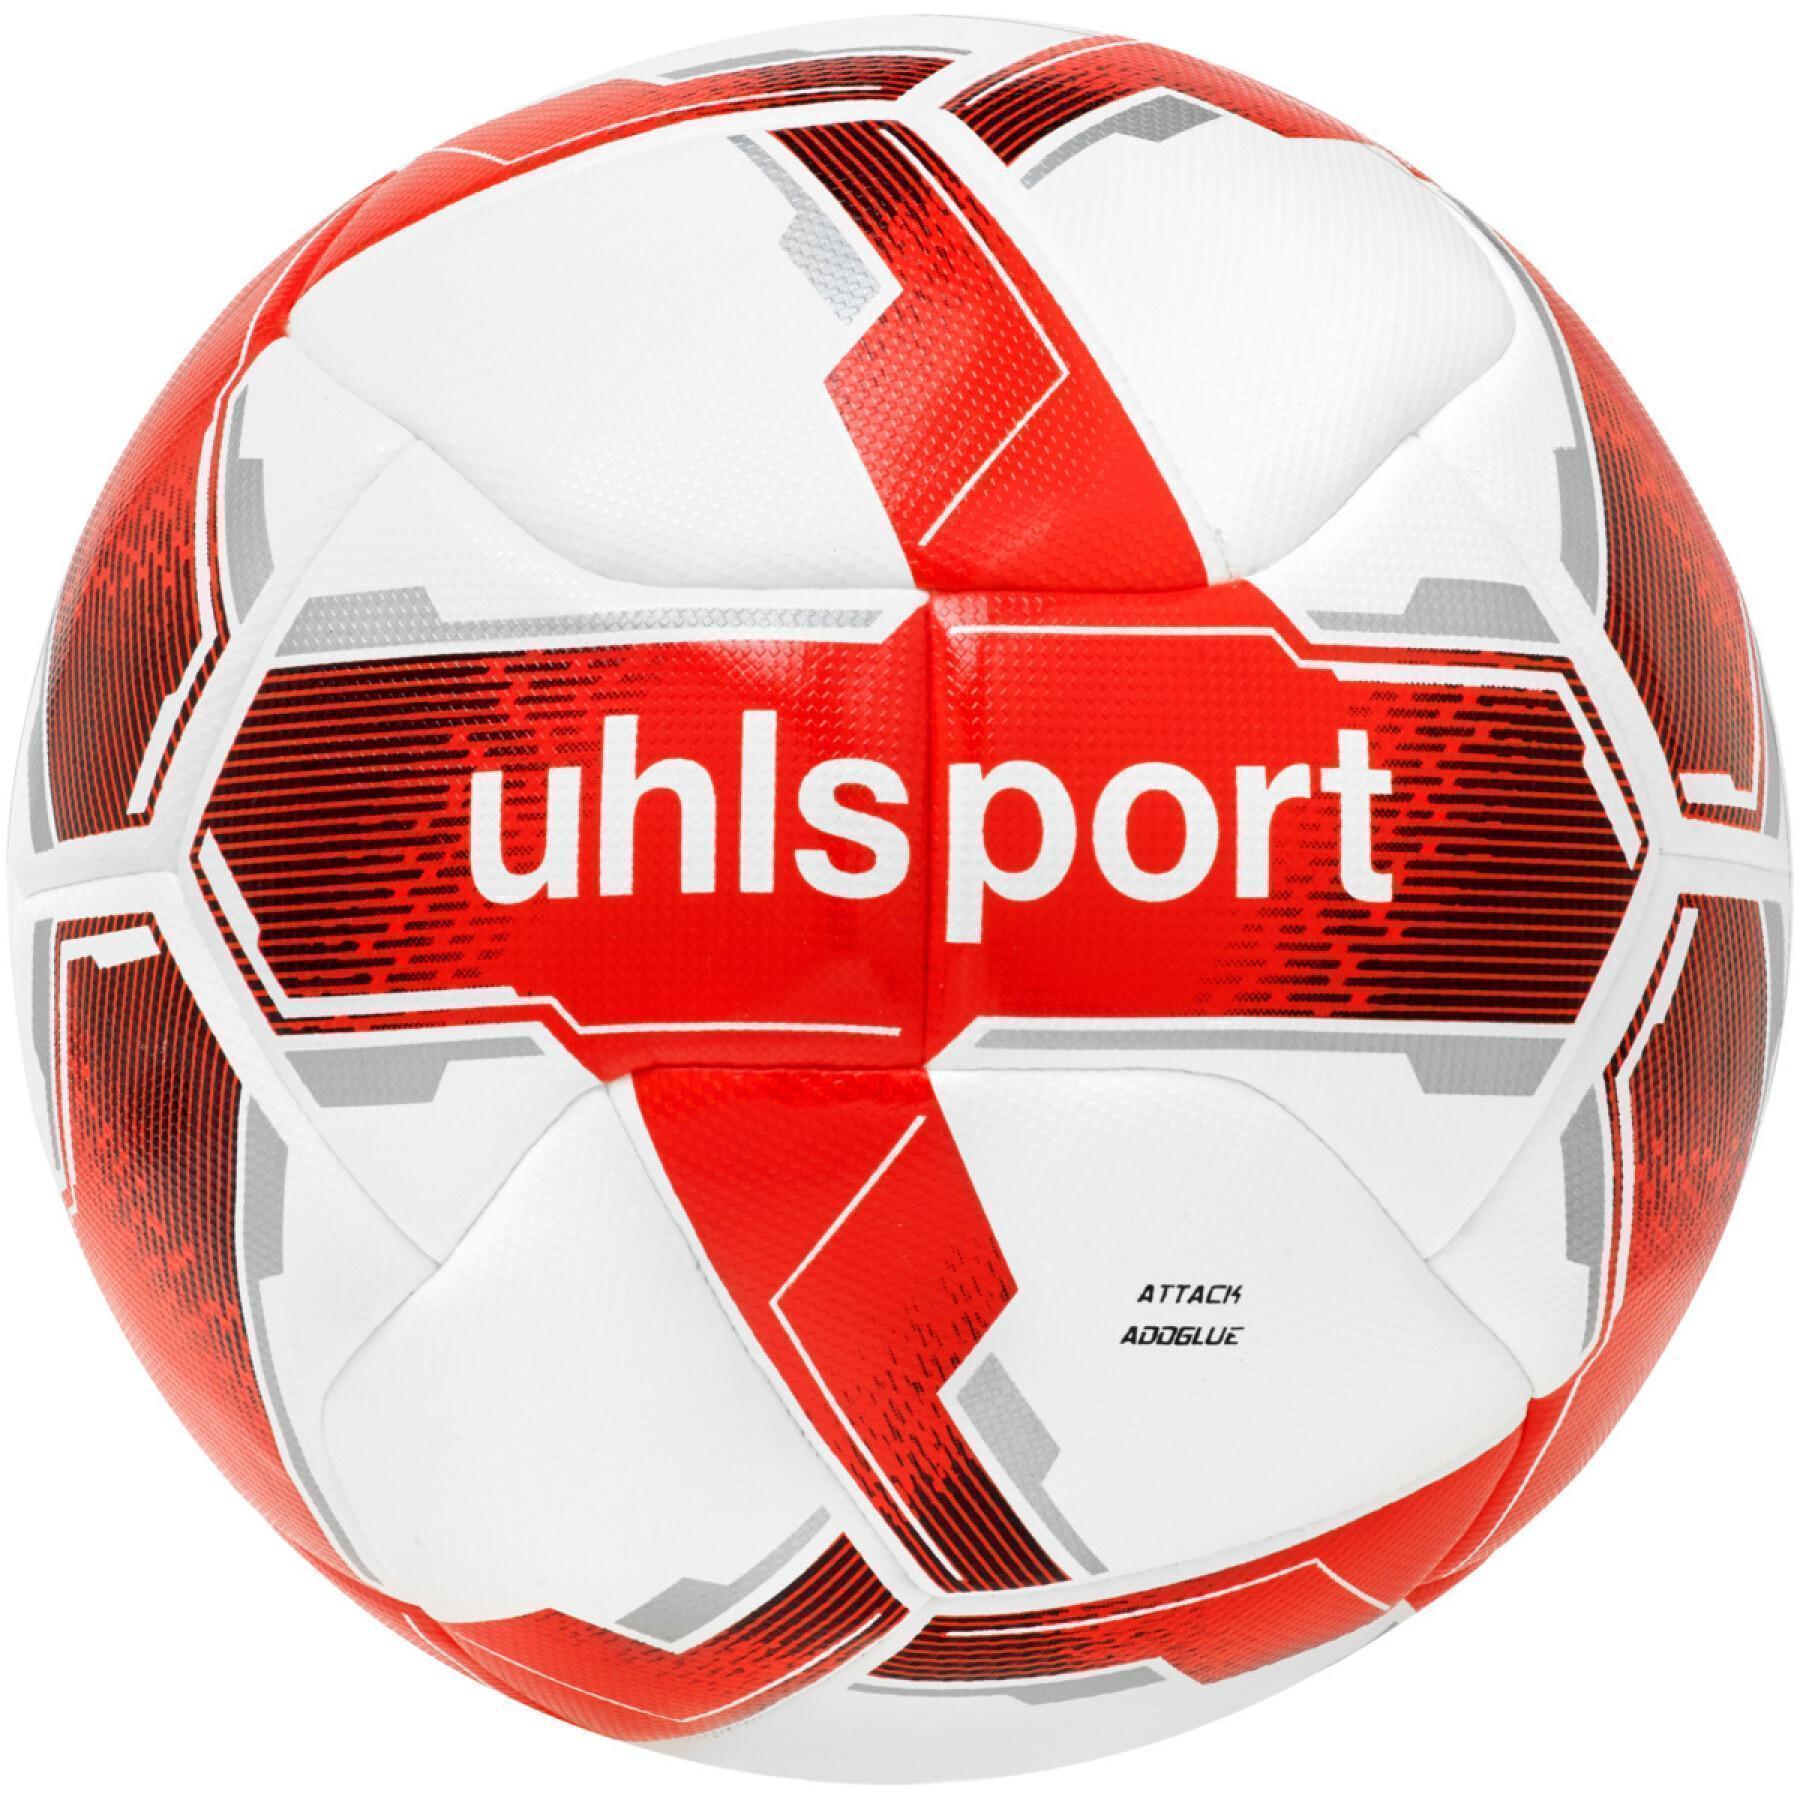 Fußball Uhlsport Attack Addglue